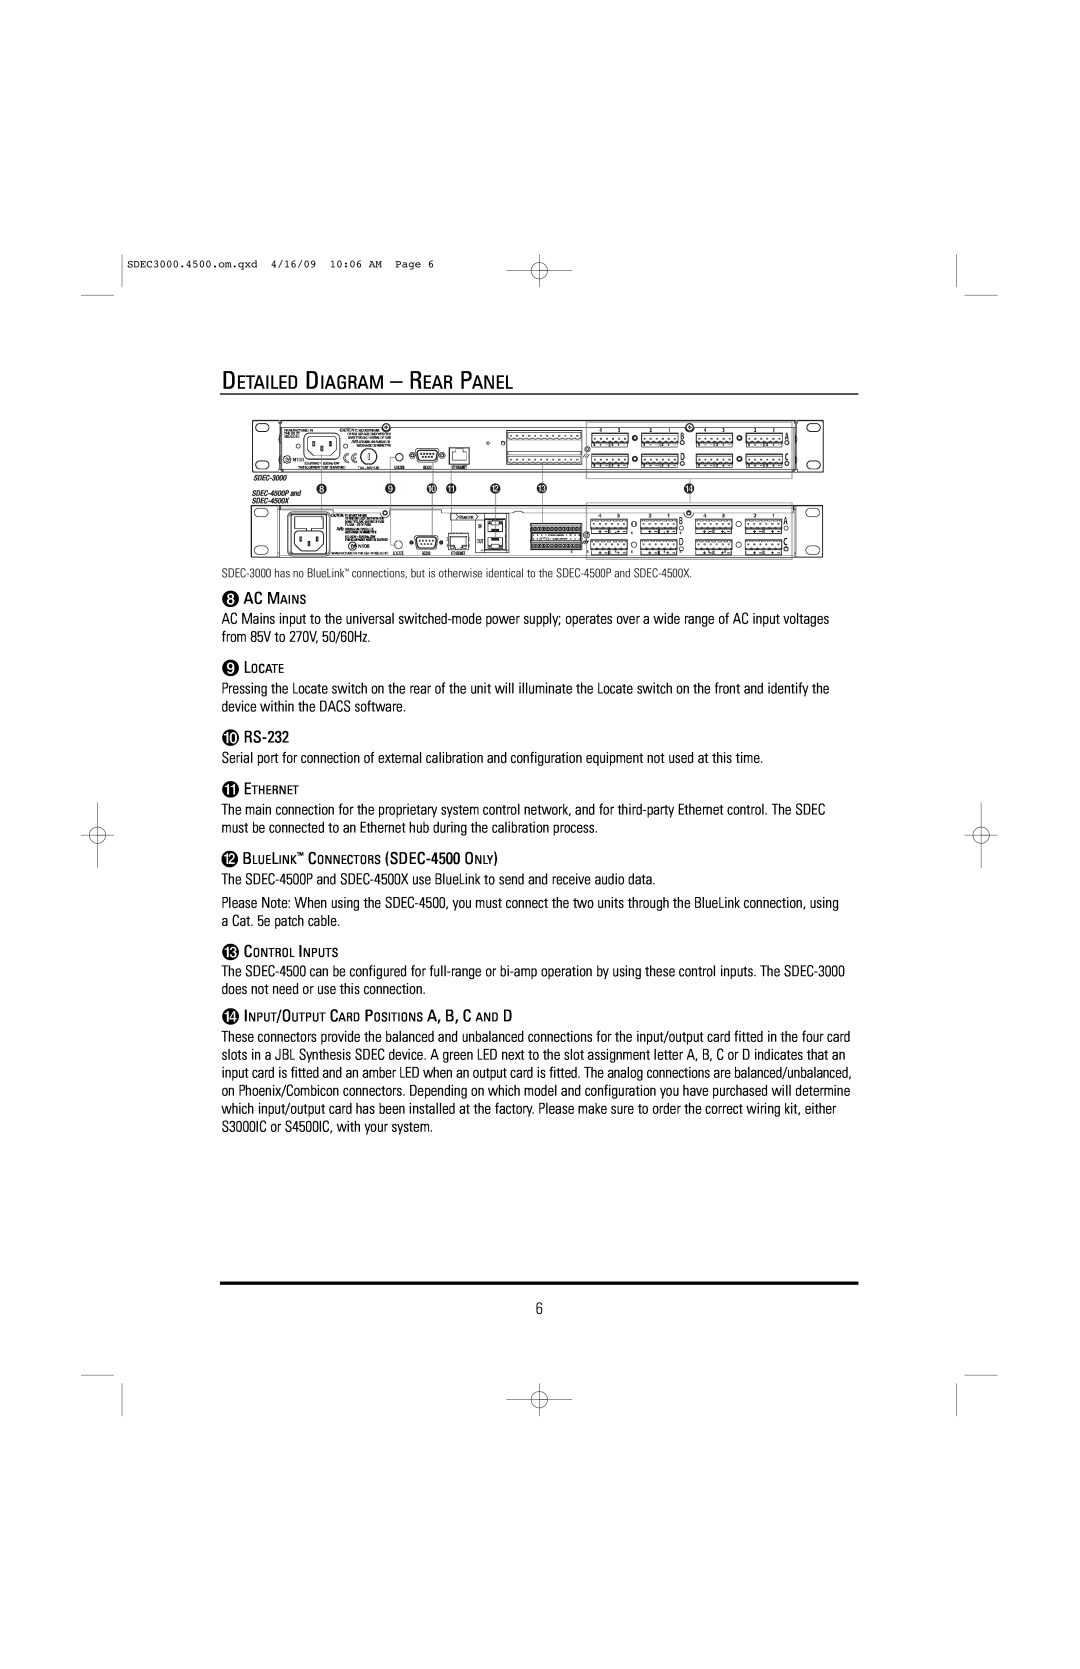 JBL SDEC-4500X, SDEC-4500P manual Detailed Diagram - Rear Panel, Ac Mains, RS-232 